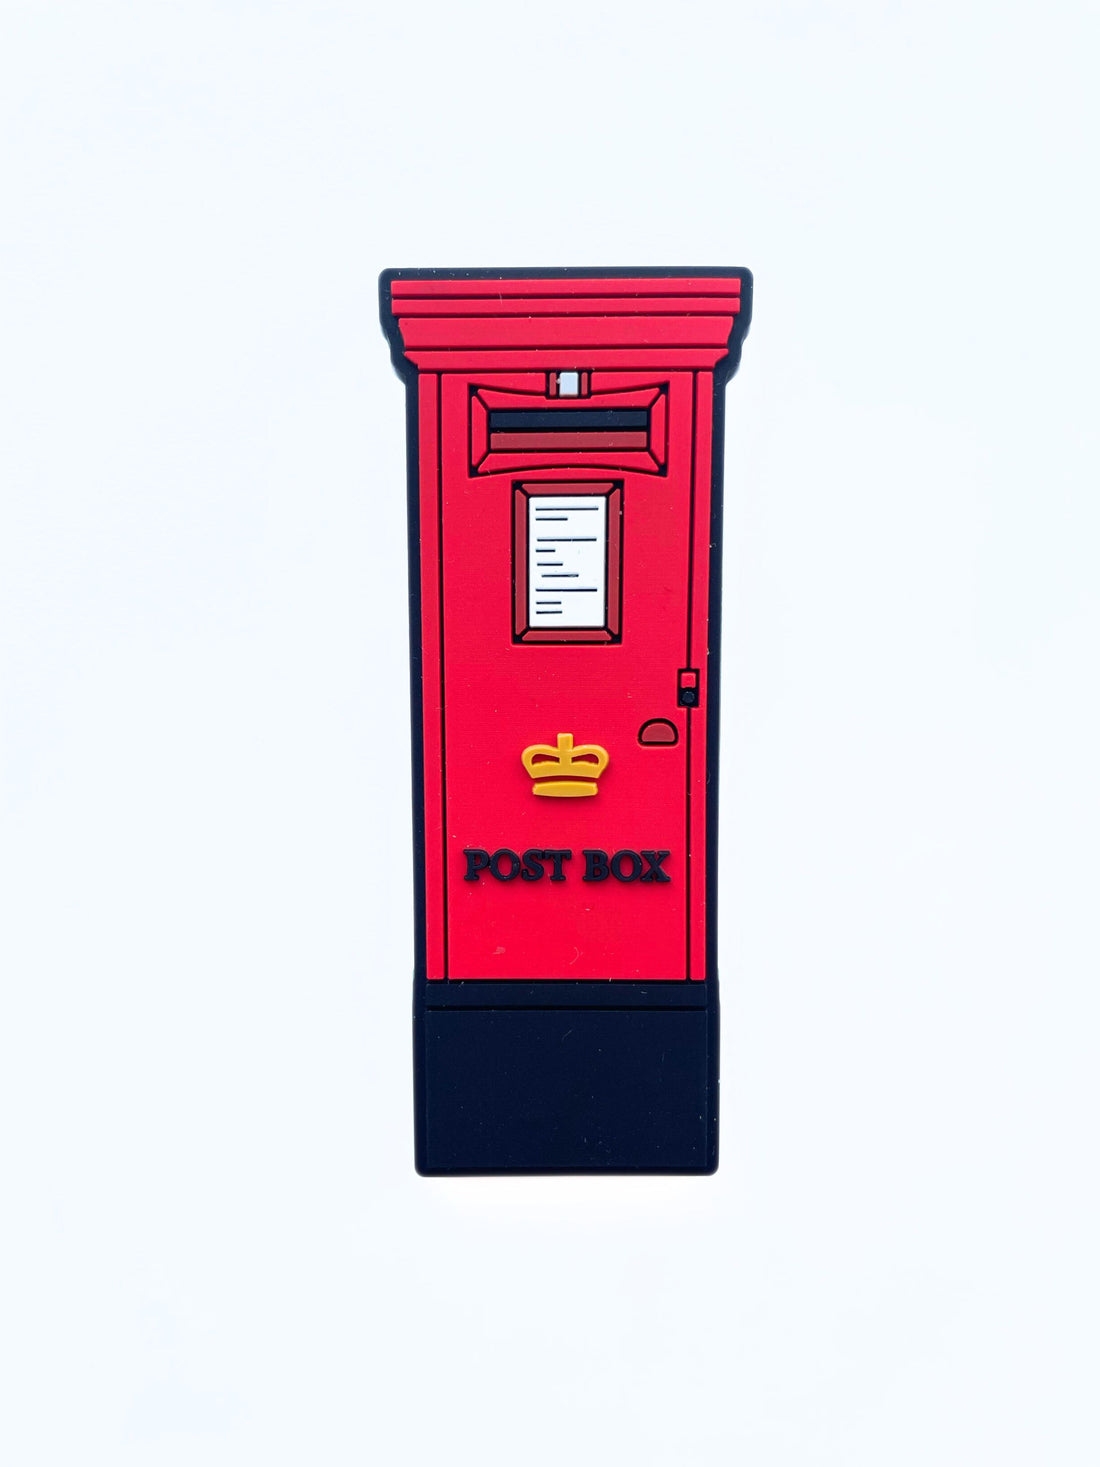 Post box Fridge Magnet